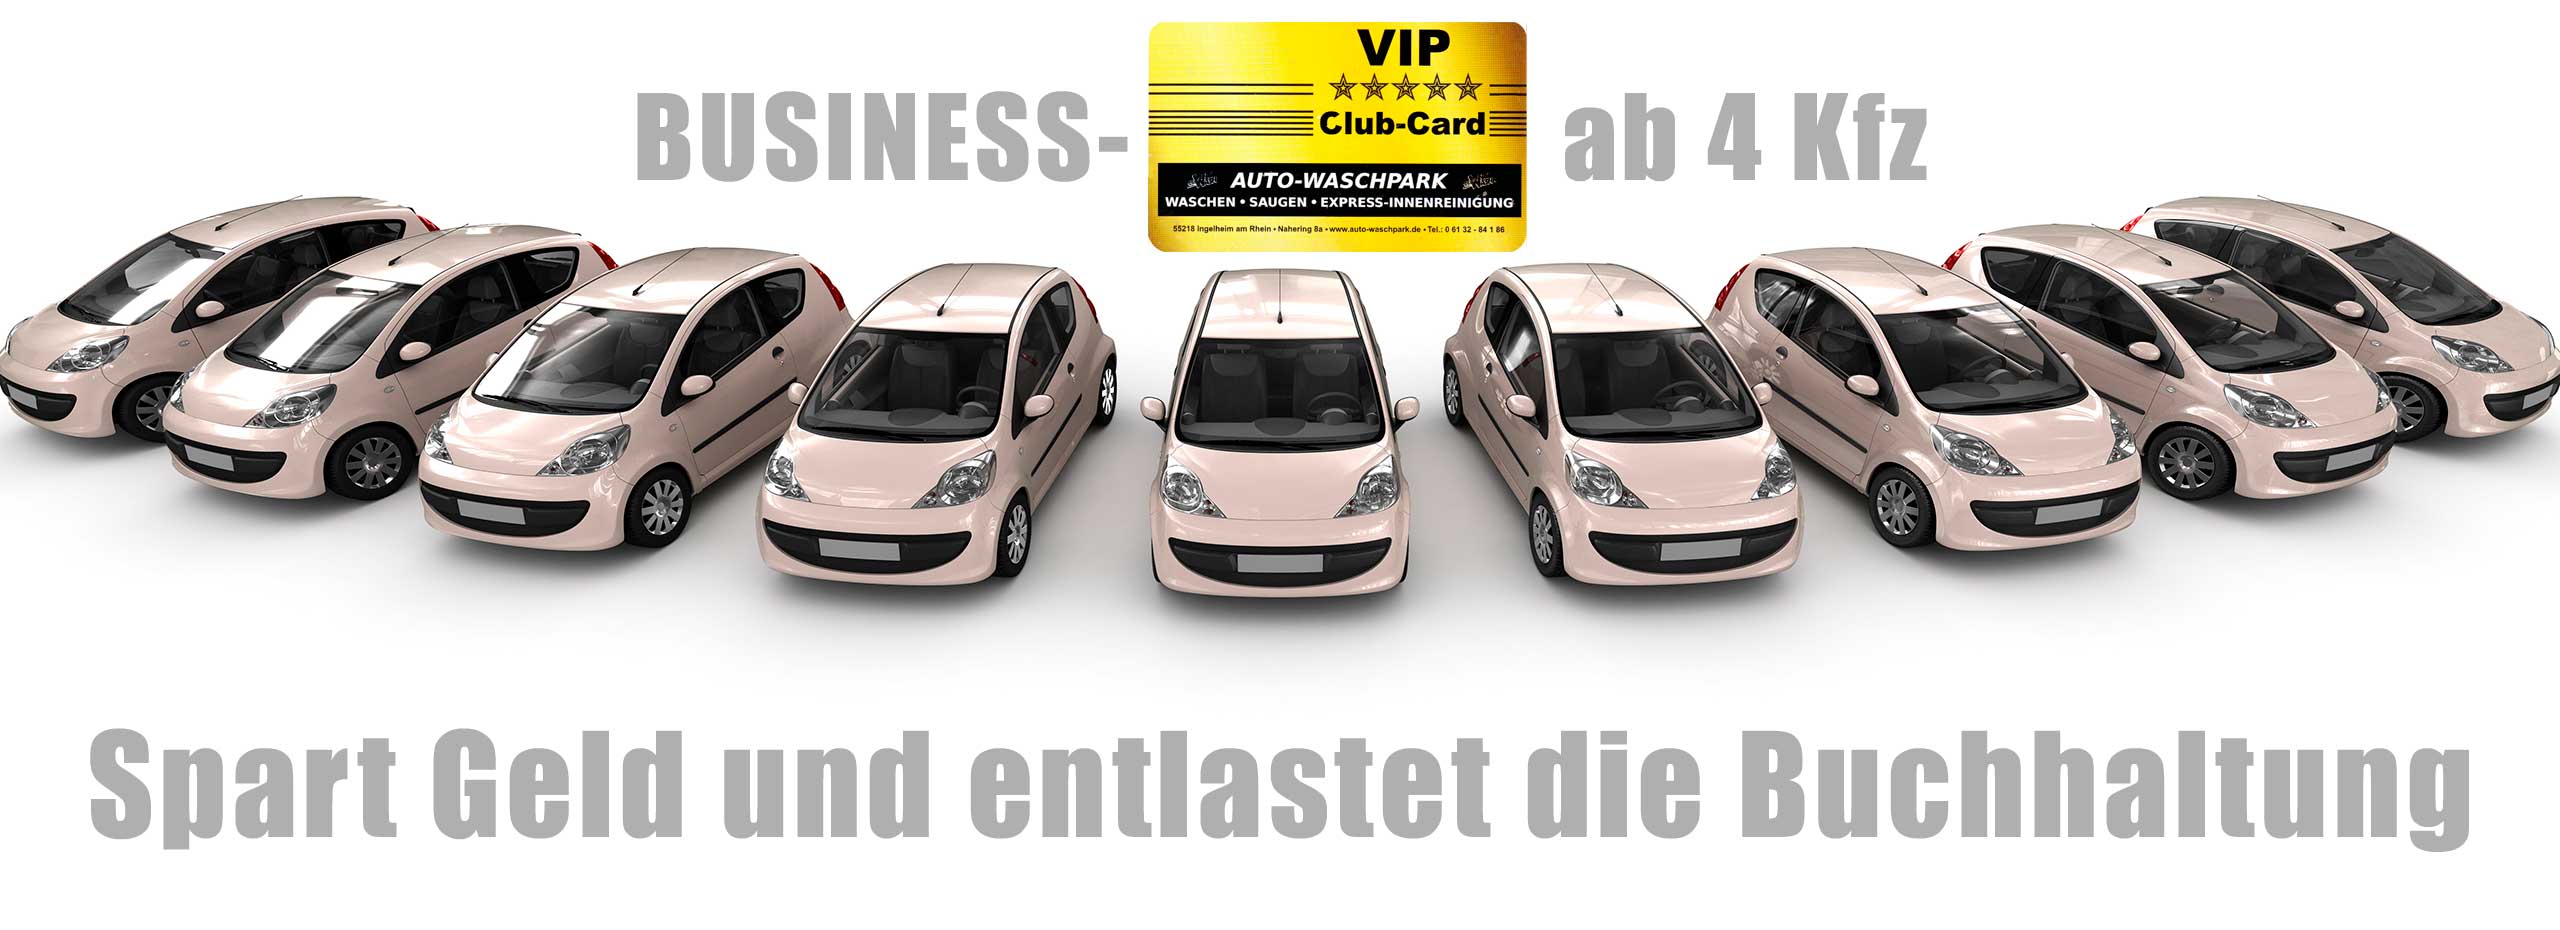 VIP-card-business